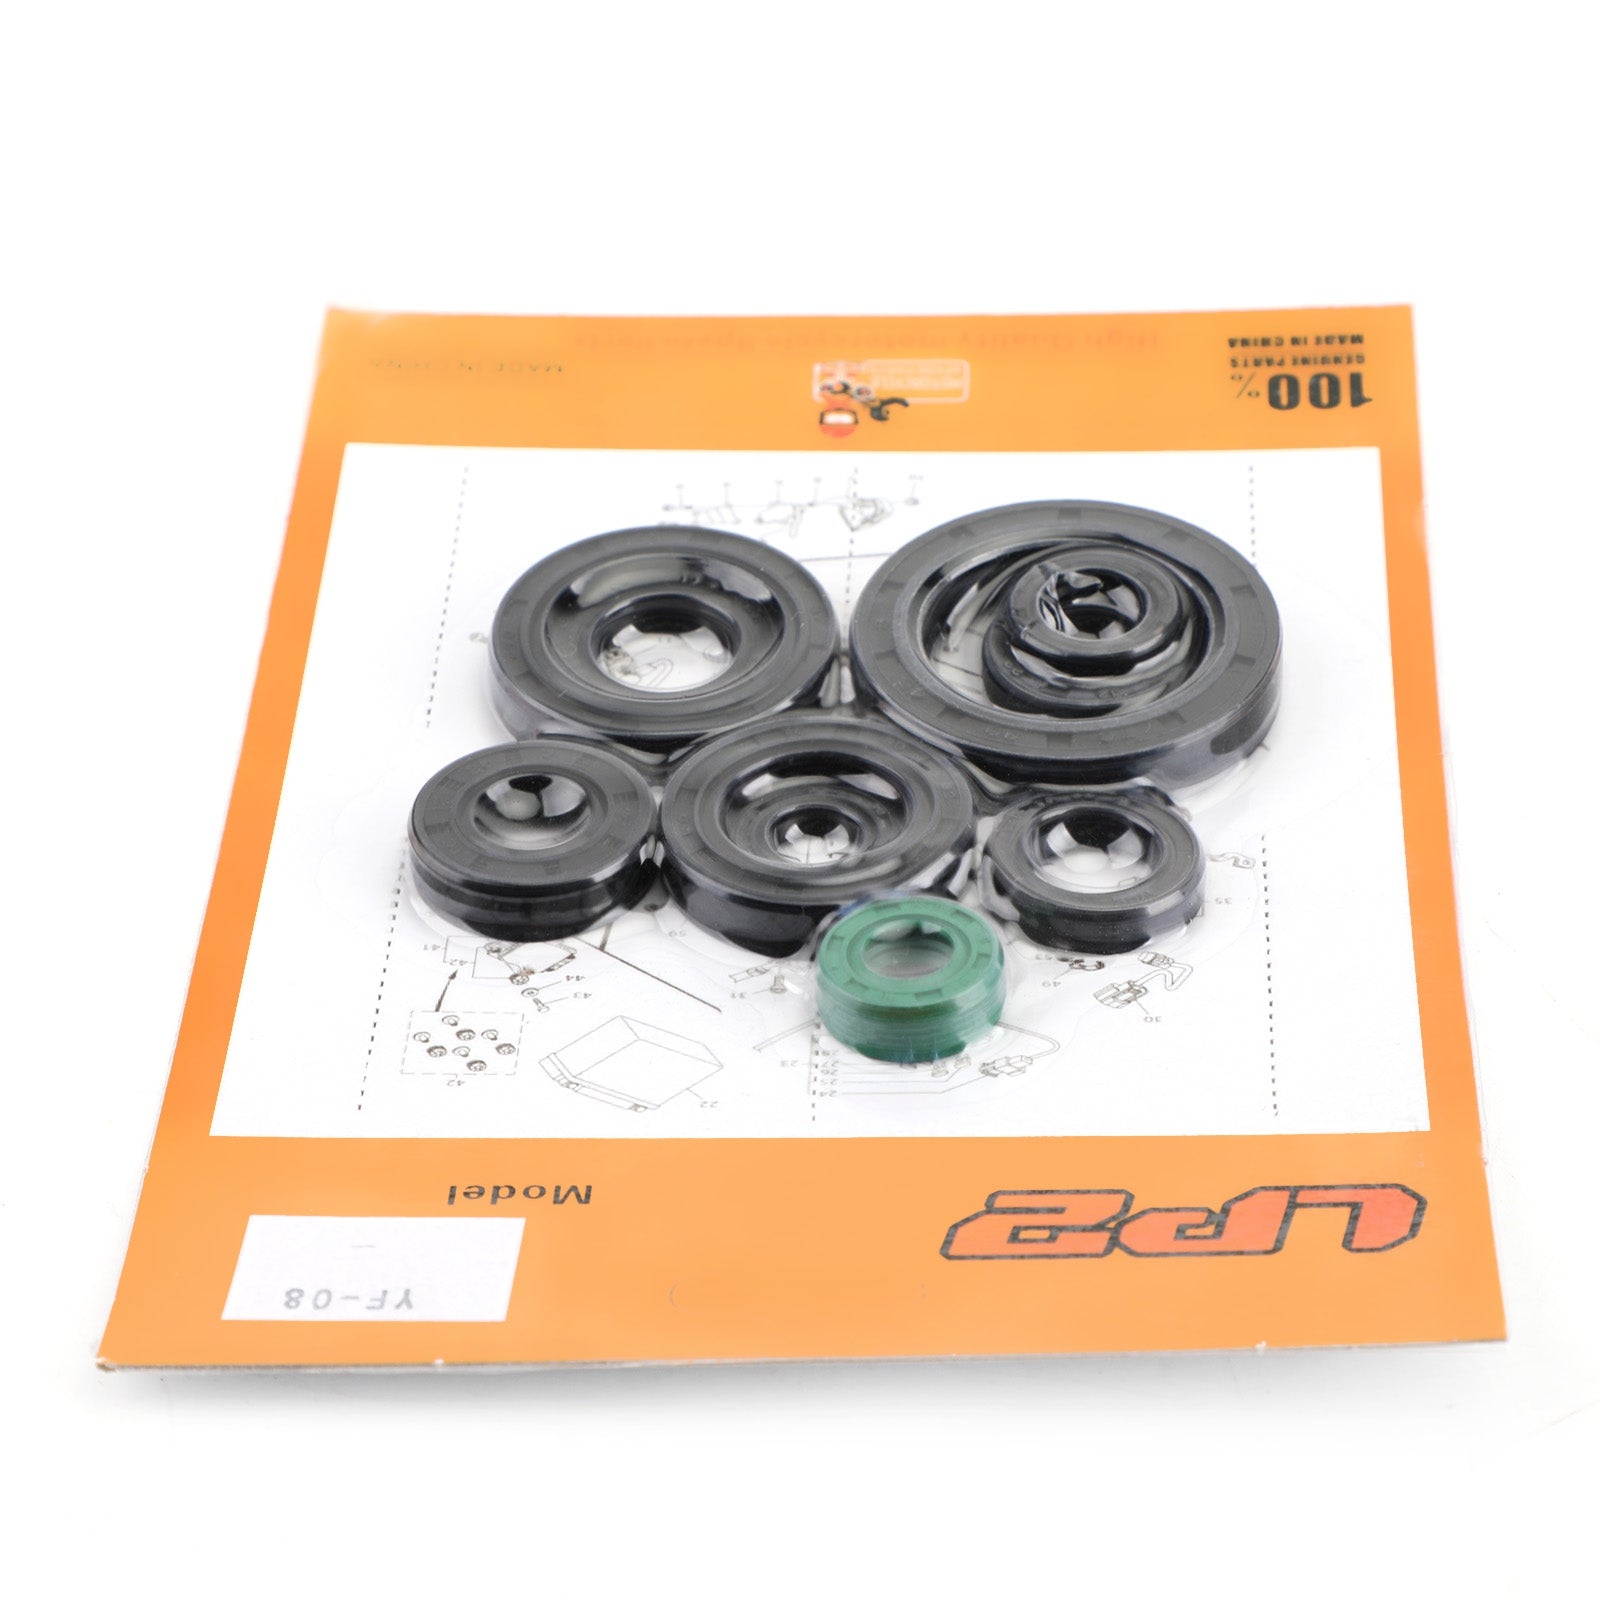 Engine Oil Seal Kit Set 10pcs Seals for Honda CR125R 1987-2003 cr125r cr 125